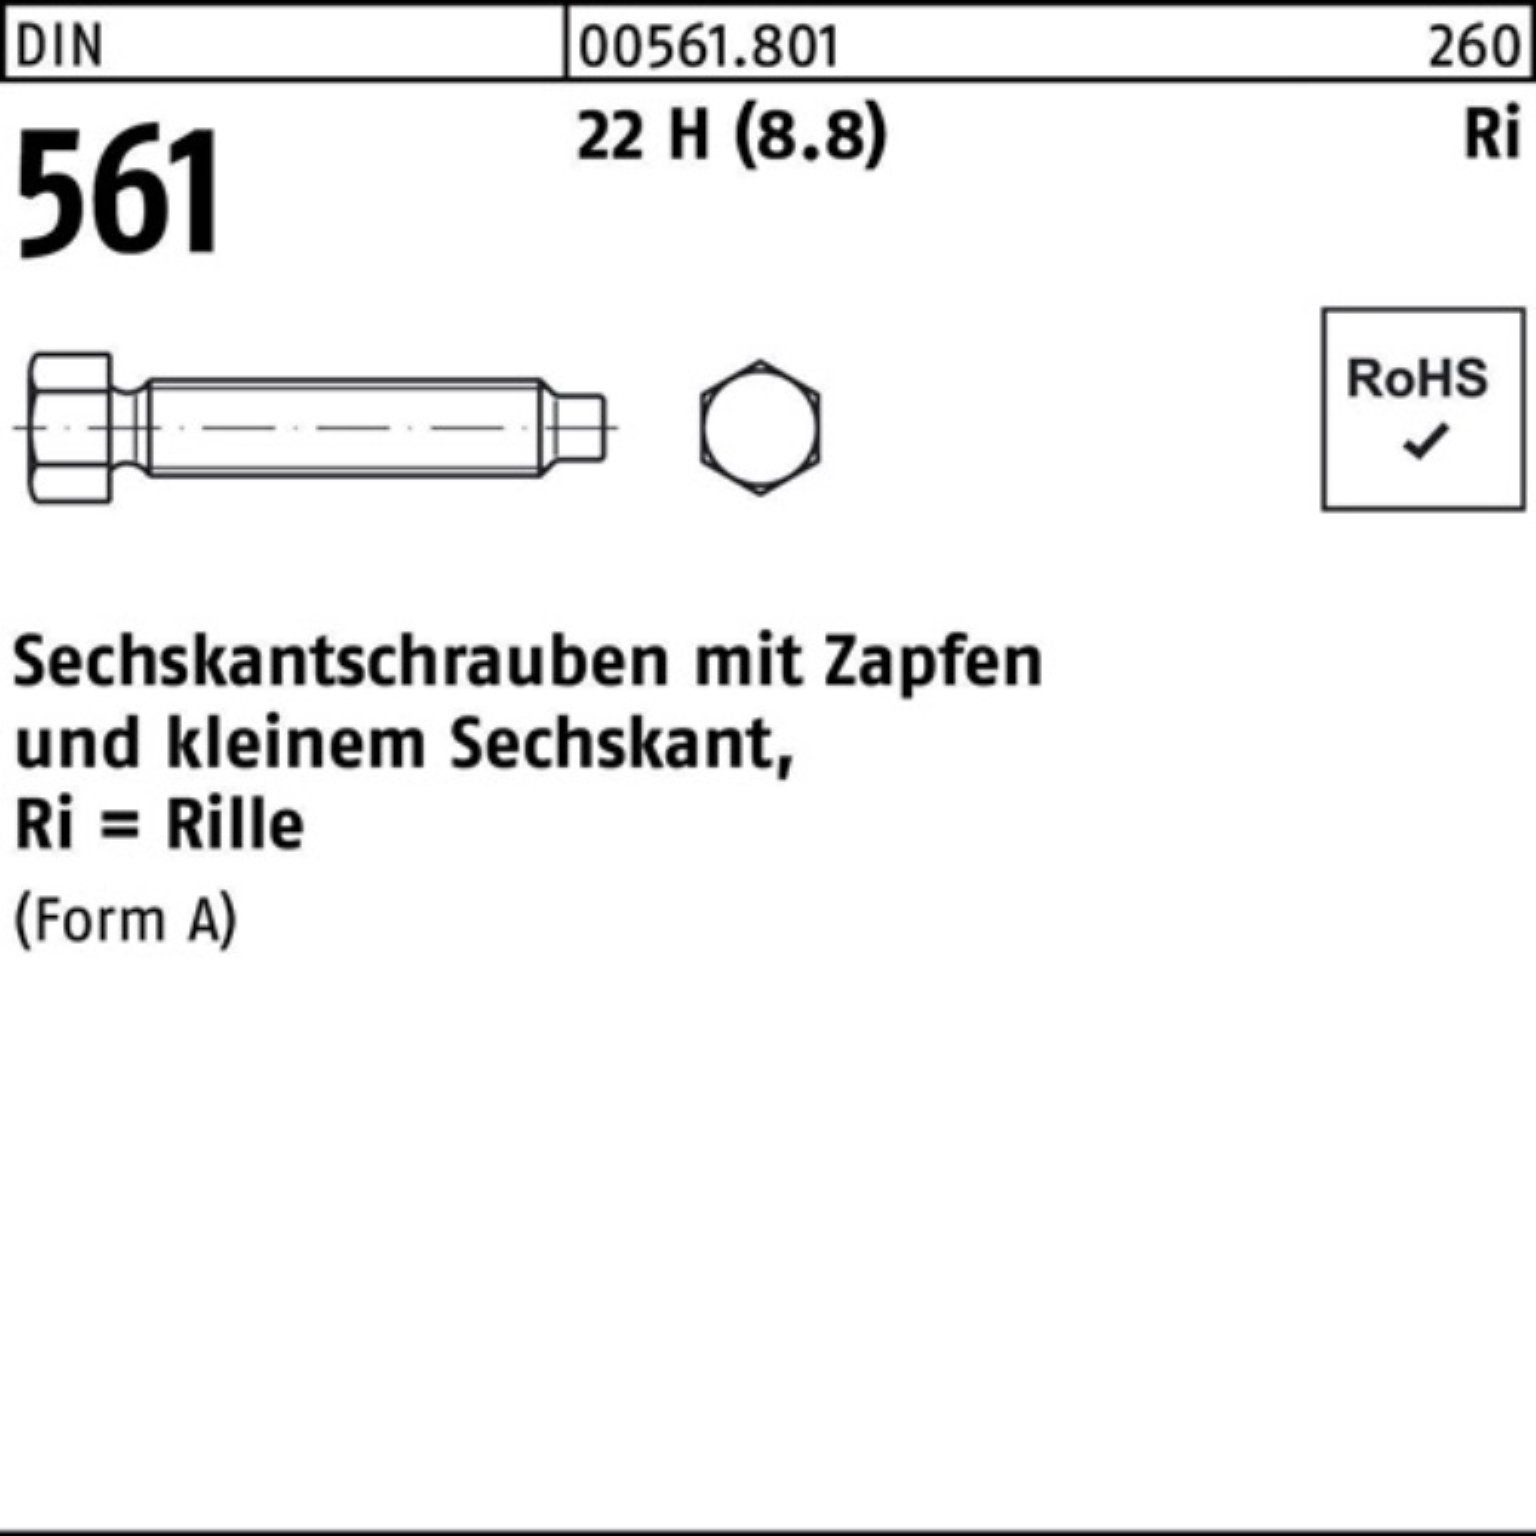 St Sechskantschraube 22 DIN 25 Zapfen (8.8) 35 561 Reyher AM 100er Sechskantschraube 16x Pack H